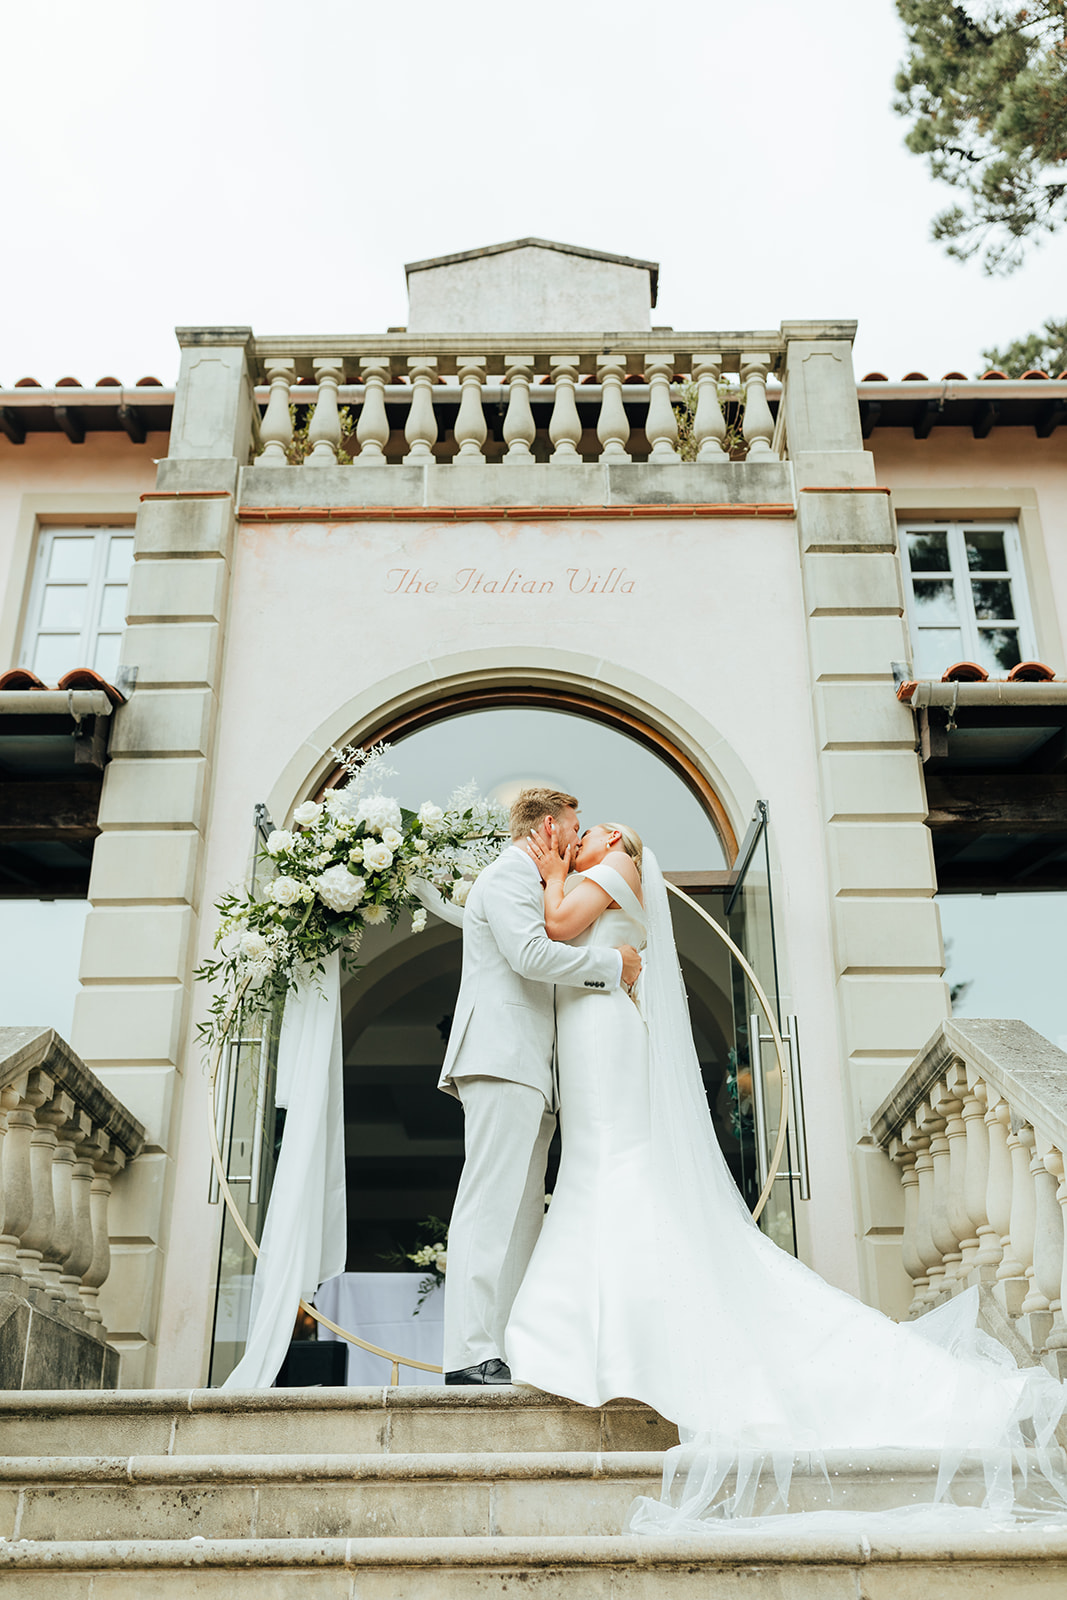 Documentary Wedding Photography at The Italian Villa, Poole by Aimee Joy Photography